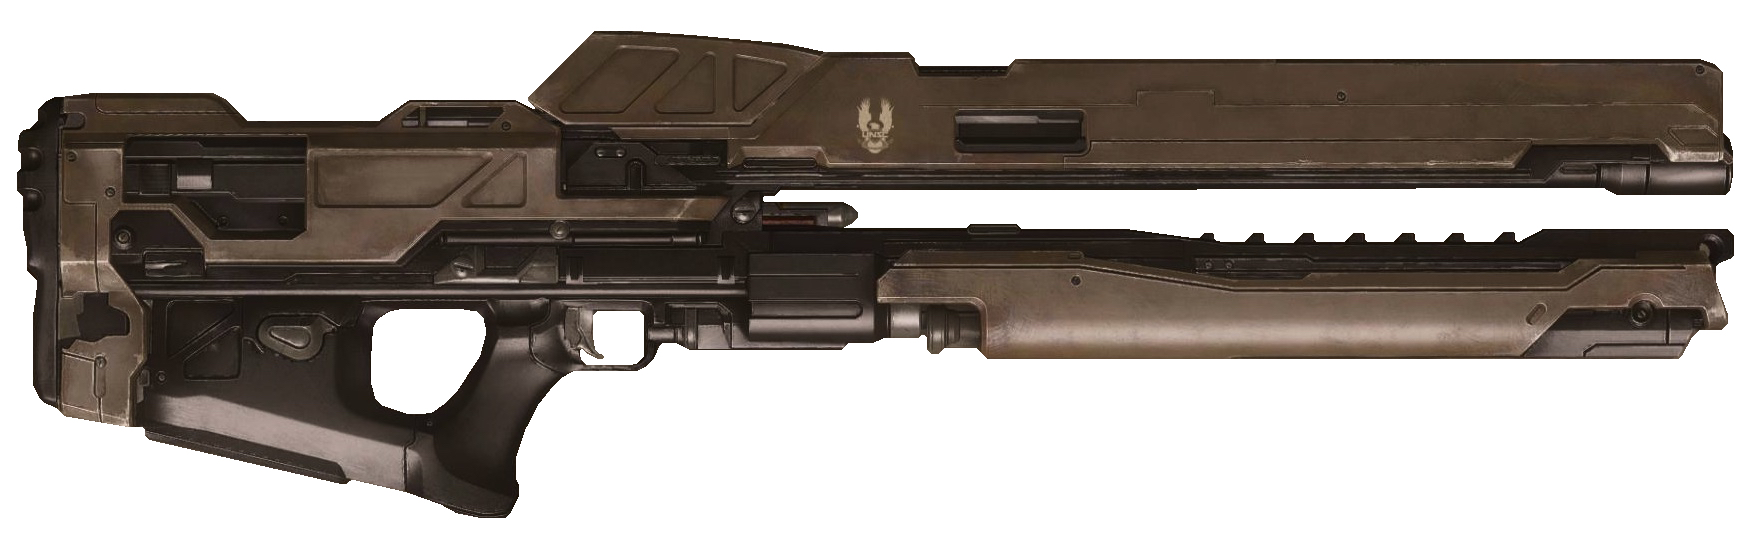 【HALO軍械頻道】ARC-920磁軌槍 —— 最好的單兵電磁武器-第19張